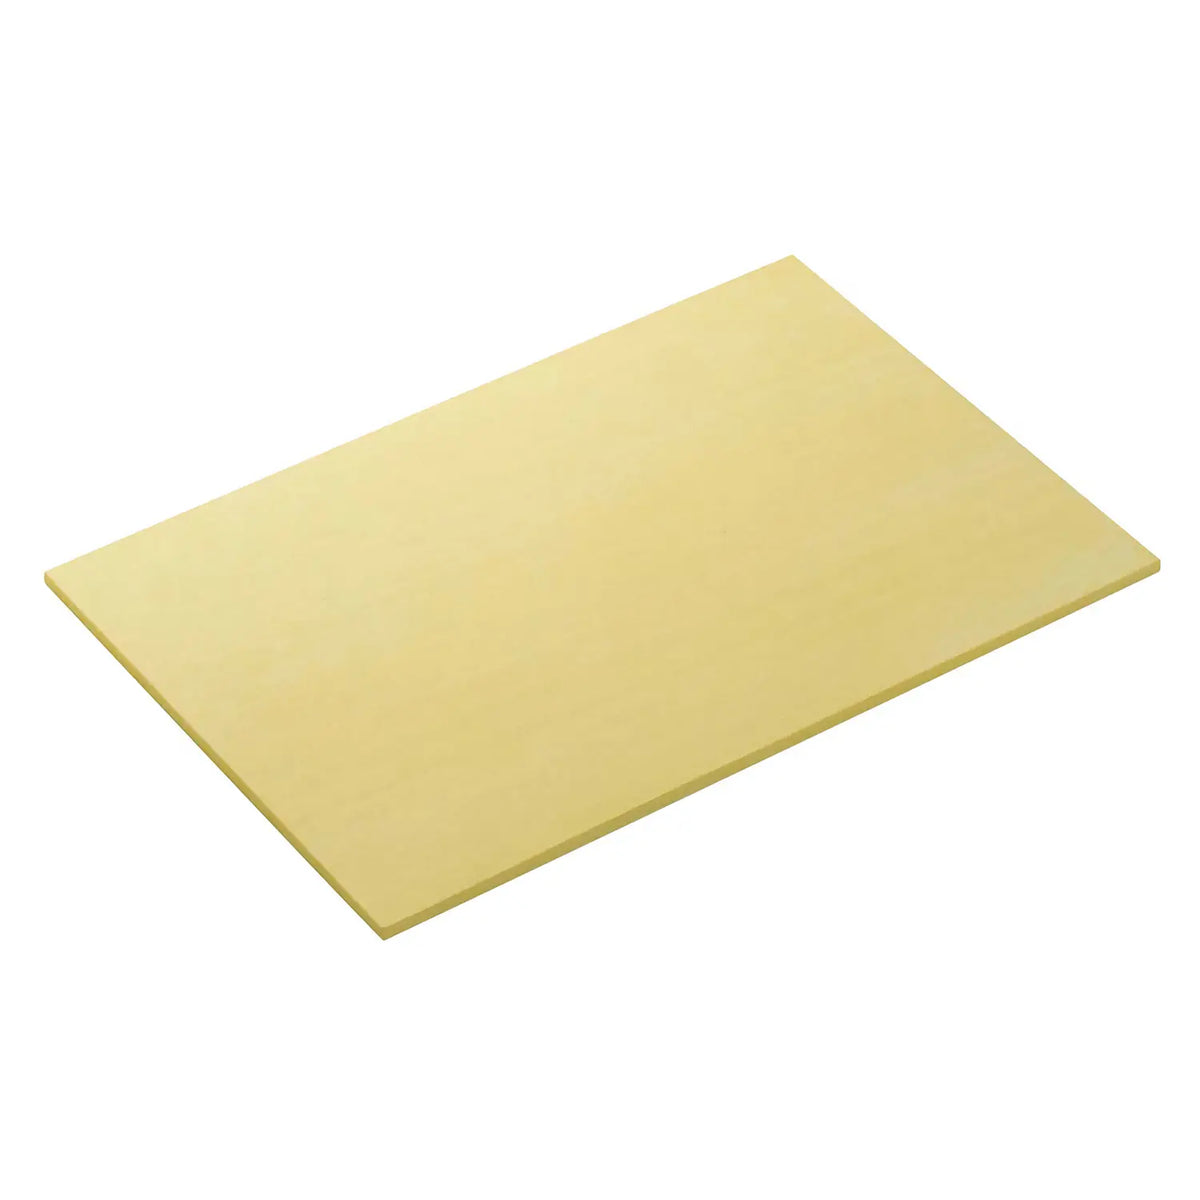 HASEGAWA Wood Core Soft Rubber Cutting Board - Globalkitchen Japan